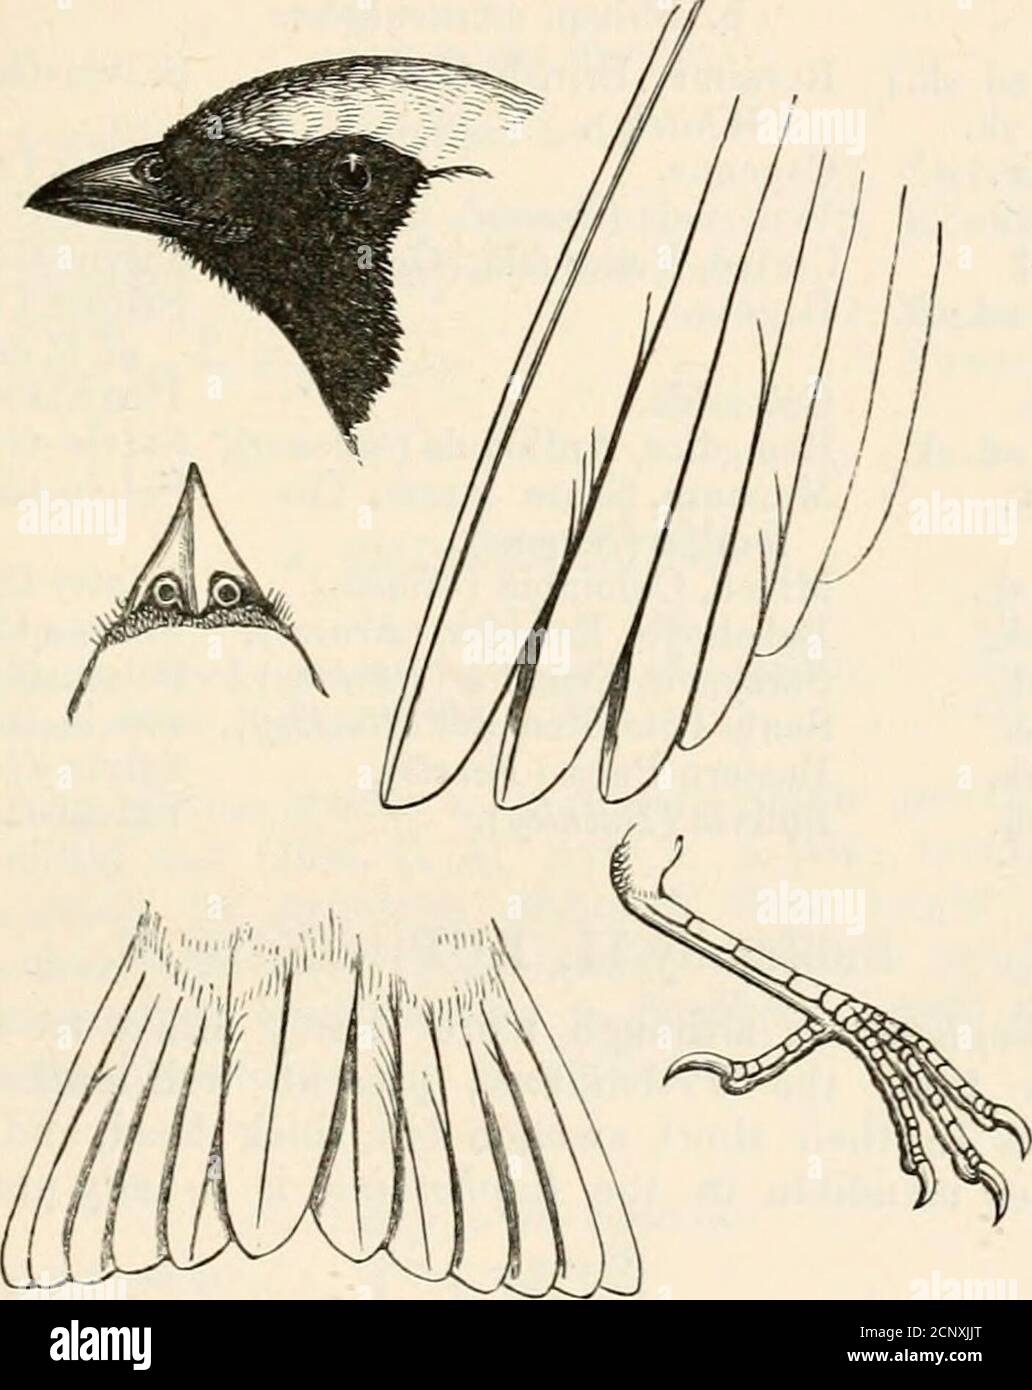 . Catalogue of the Birds in the British Museum . undinacea,-Sm. Zool. III. ser. 1, pi. 21.Procnias tersa, i&gt;p. Conqh i. p. 232; Cab. Mvs. Hein. i. p. 329 ; P,urm. Si/st. Ueb. iii. p. 191; Scl. Cat. A. B. p. 55; Gray, Hand-l. ii. p. 77; Salv. ^ Godm. Ibis, 1879, p. 199; Scl. et Salv. P. Z. S. 1879, p. 597 ; iid. Nomencl. p. 17 ; Pelz. Orn. Bras. p. 132 ; Salv. Cat. Stricld. Coll. p. 178 ; id. Ibis, 1885, p. 207 (Brit. Guiana).Procnias crerulea, Dm6o2s, Eev. Zool. 1861, p. 620; Berlepsch, Ibis, 1881, p. 244.Procnias occidentalis, Scl. P. Z. S. 1854, p. 240, 1855, p. 15-3, 1858, 1. PEOCXIAS. 5 Stock Photo